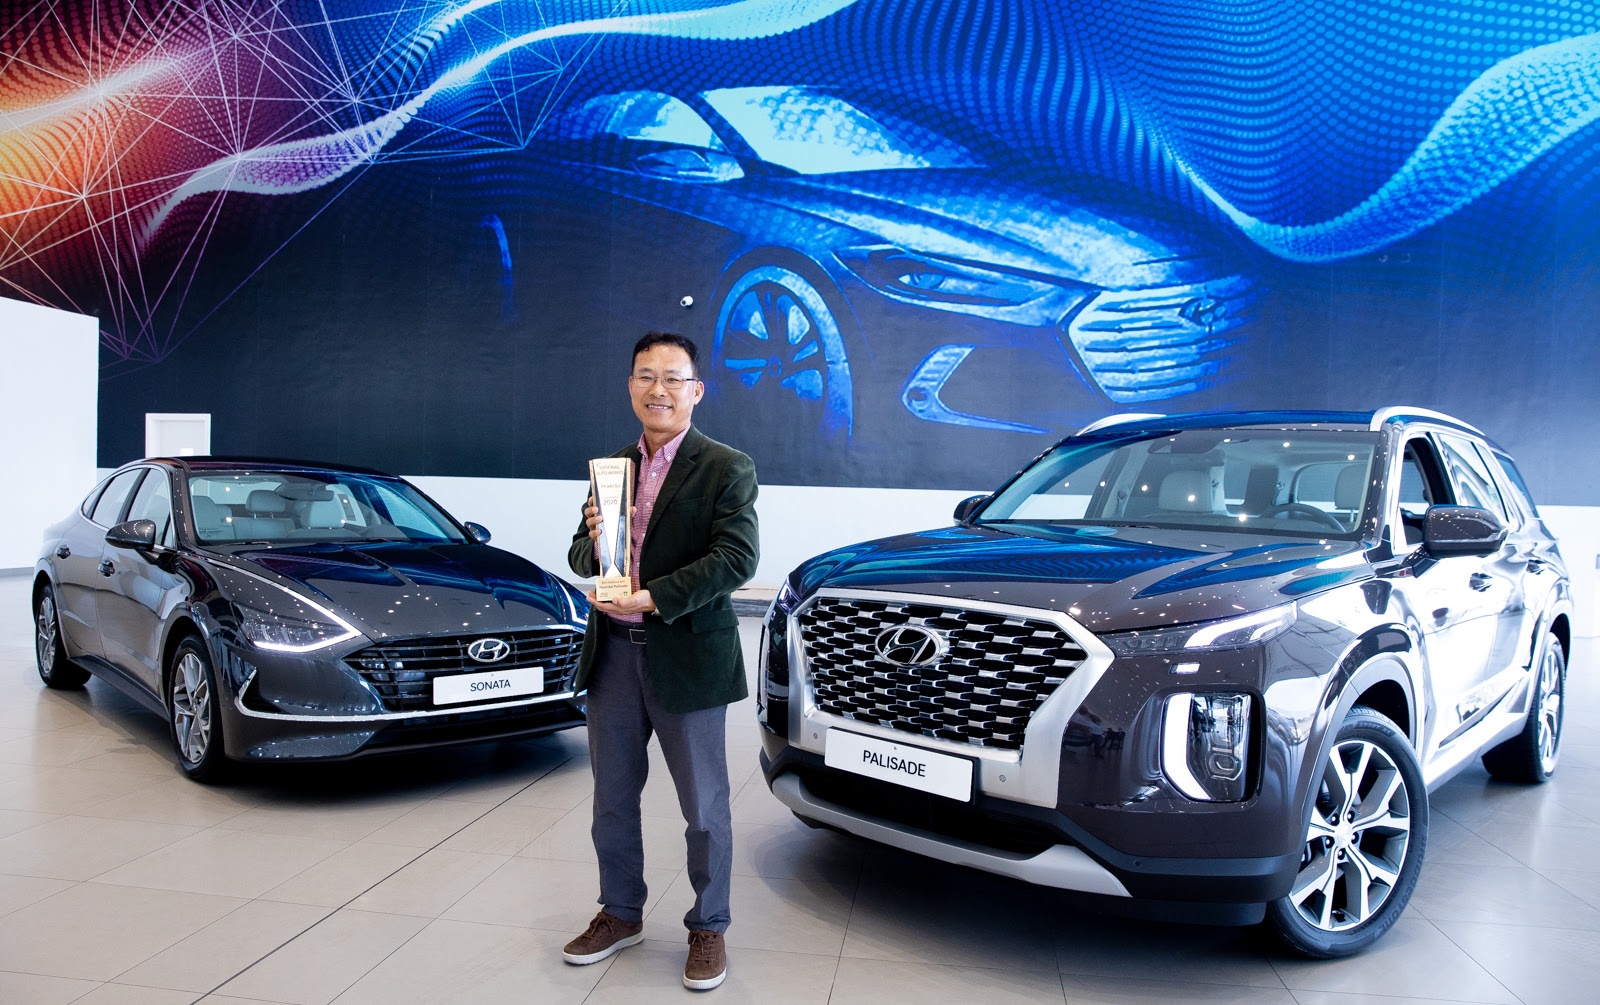 Hyundai’s Palisade and Sonata named Saudi Arabia’s best cars at PR Arabia National Auto Awards 2020